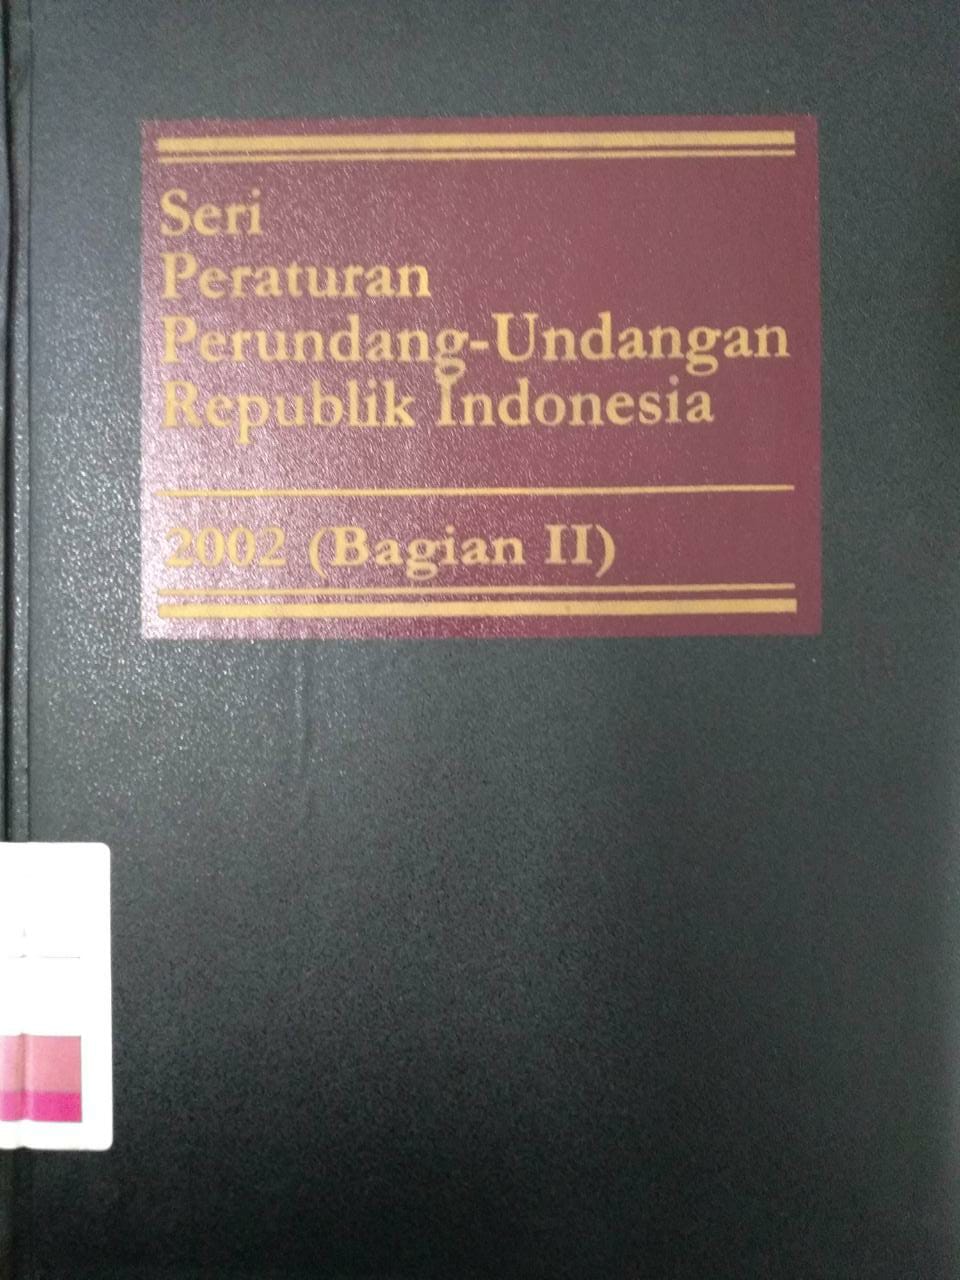 Seri Peraturan Perundang-undangan Republik Indonesia 2002 (Bagian IV) Jilid 1